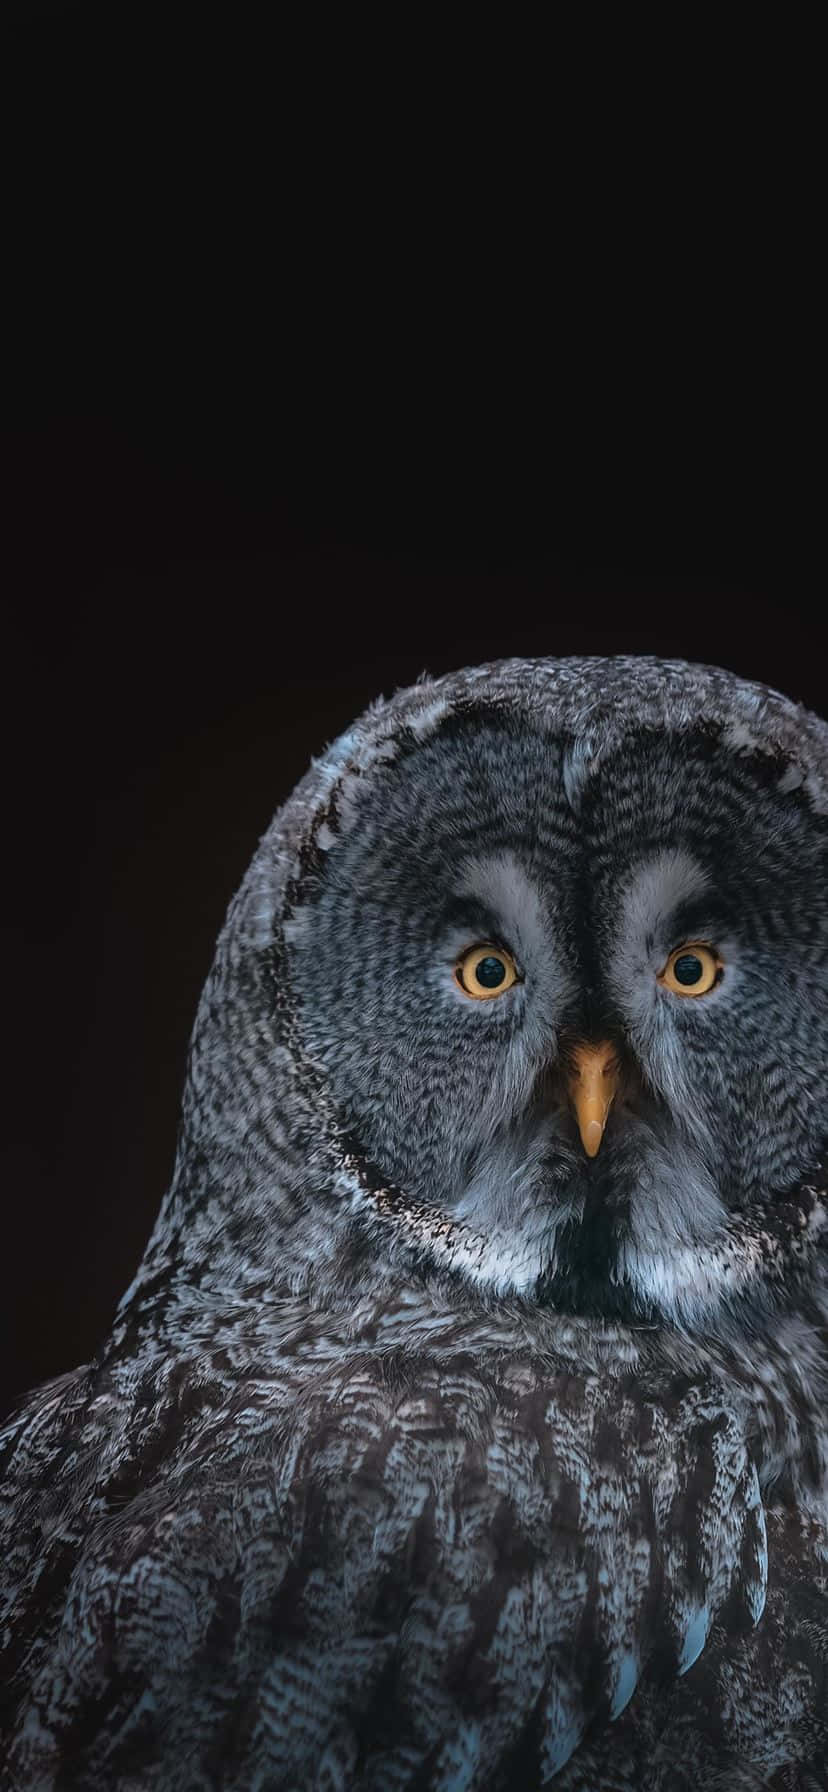 Get The Owl Phone, The Best In Smartphone Design Wallpaper